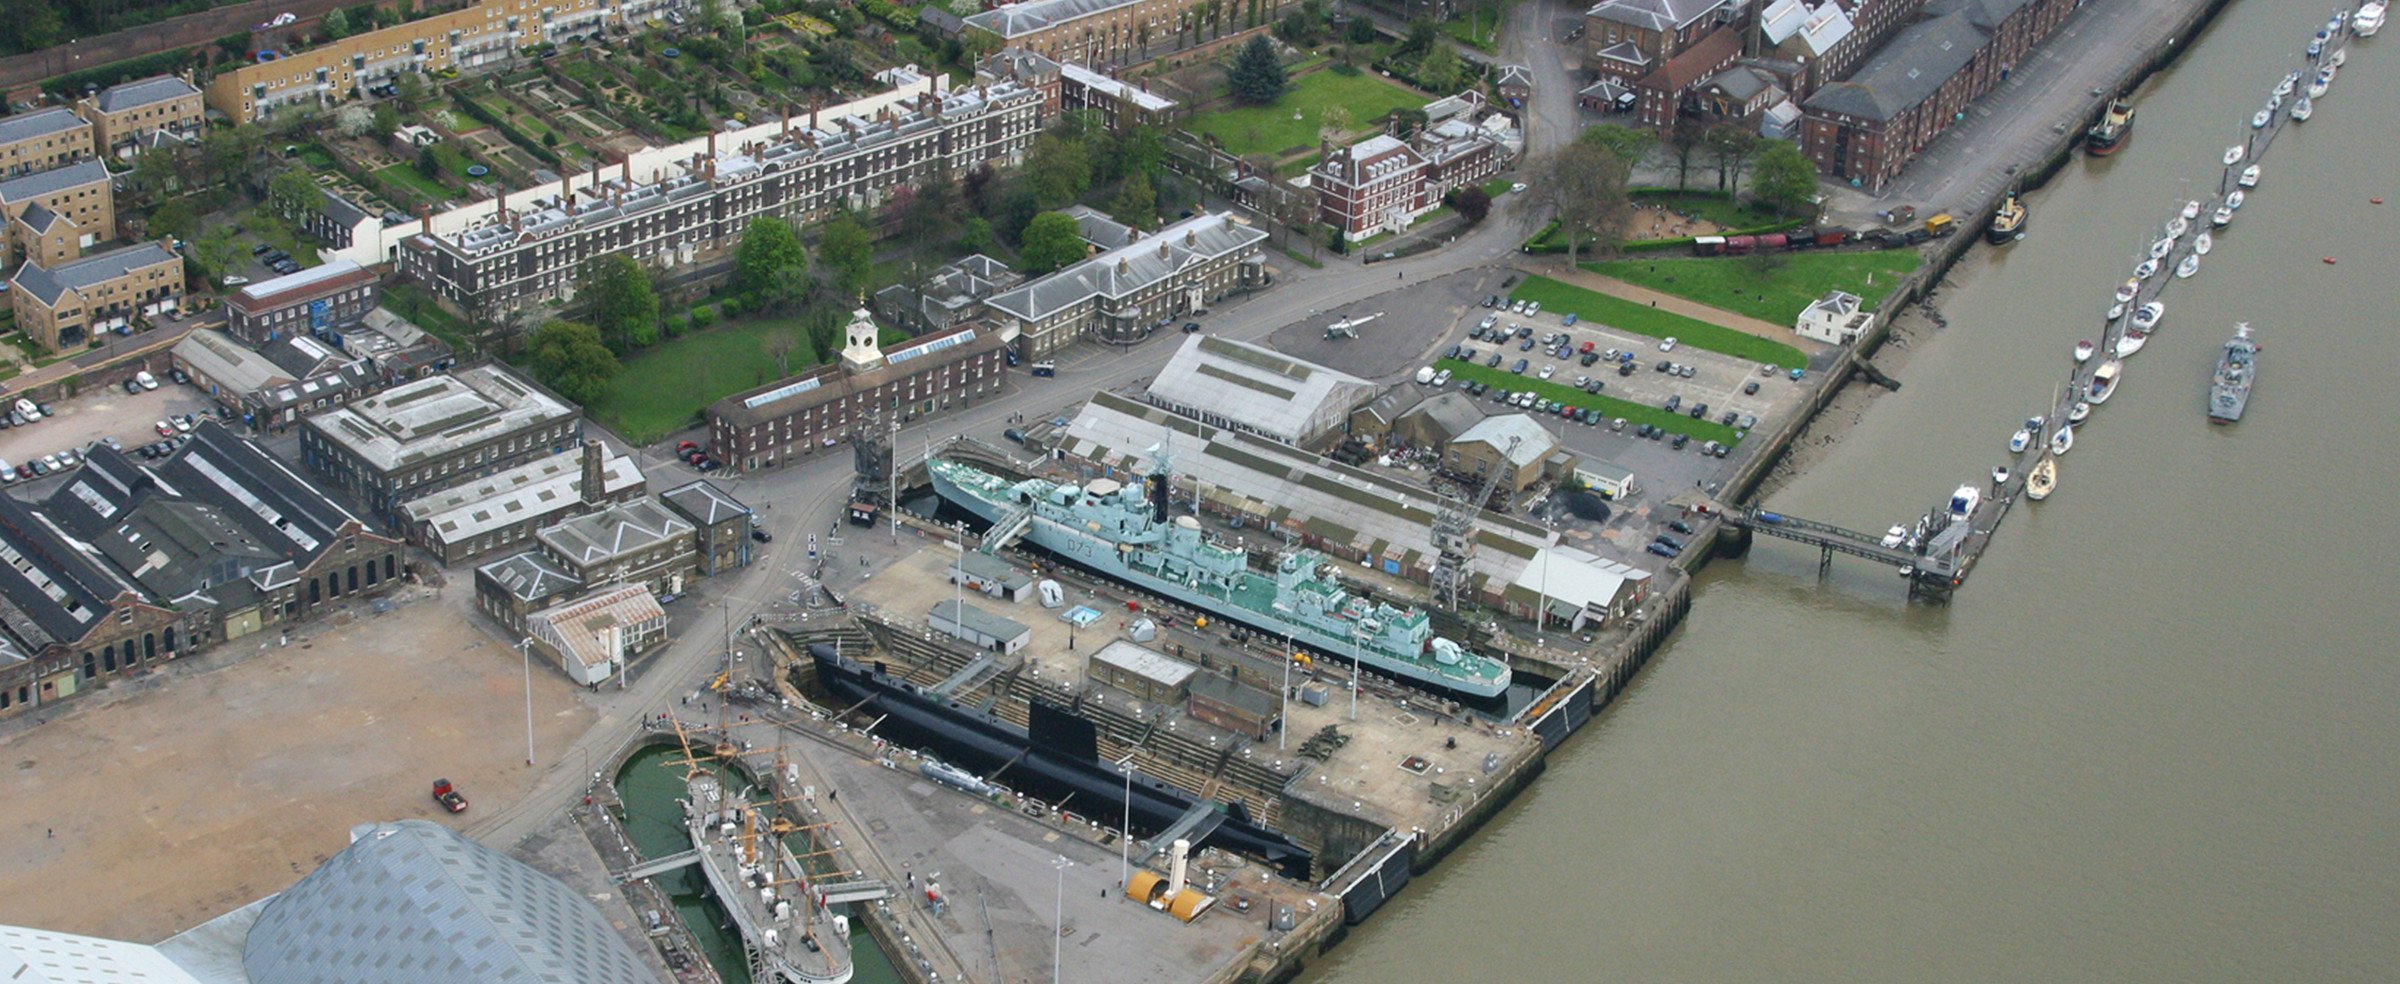 Chatham Historic Dockyard aerial view